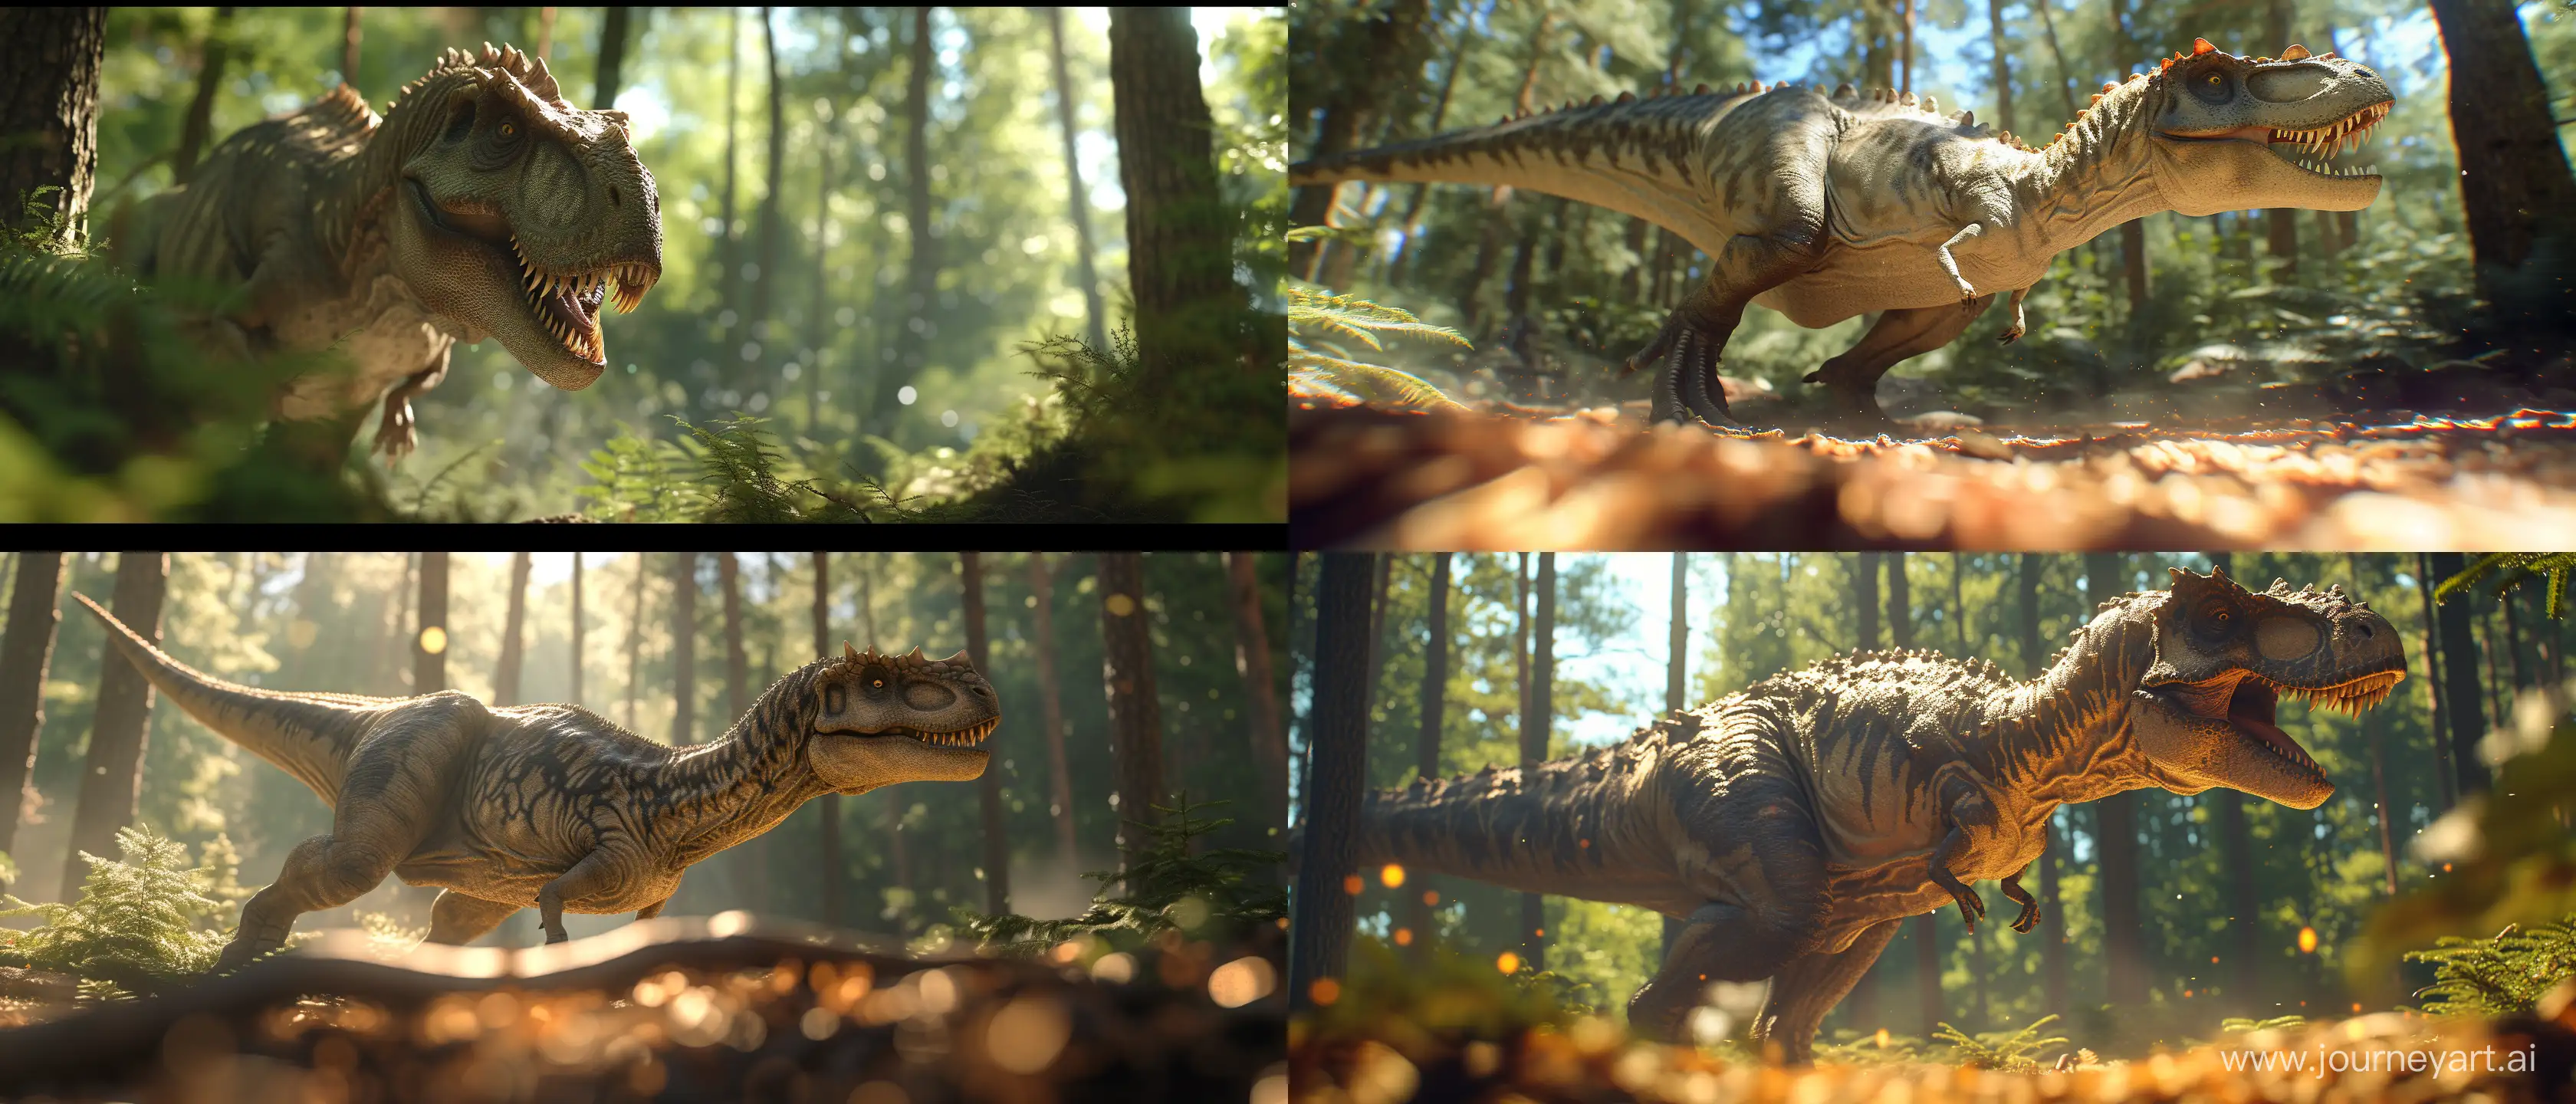 HyperRealistic-Dinosaur-Encounter-32K-Forest-Animation